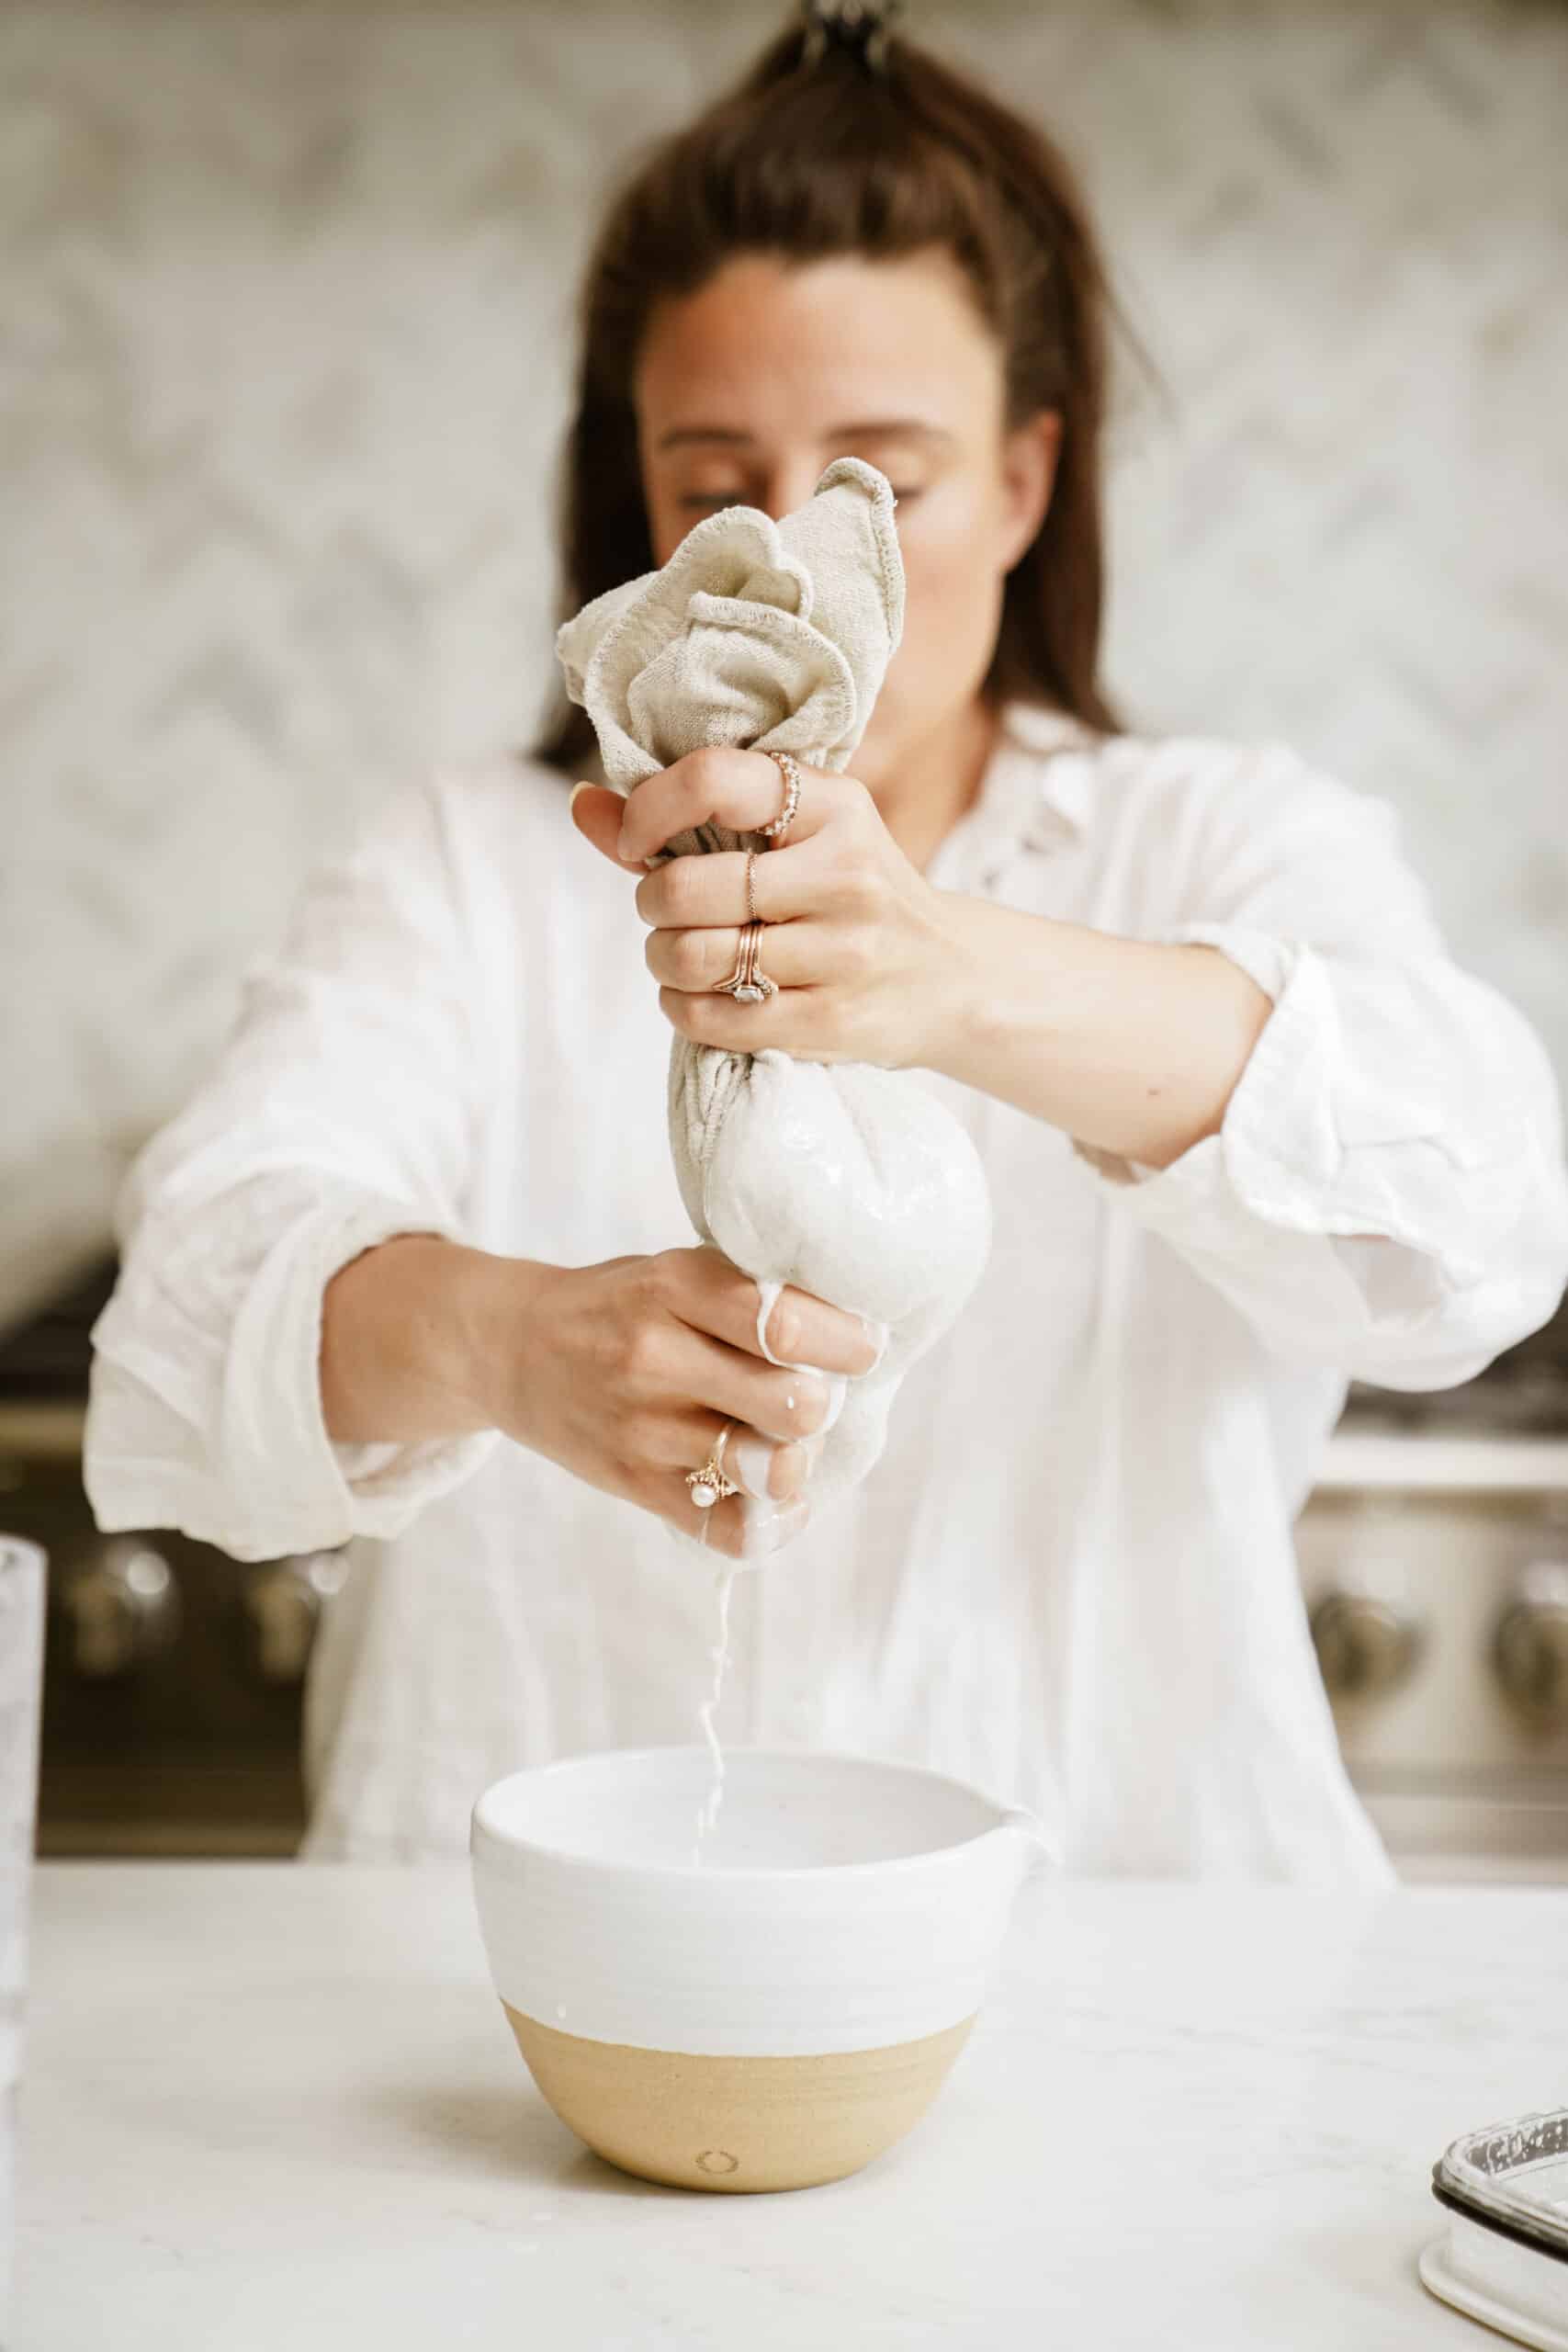 Maria making barista oat milk in a bowl